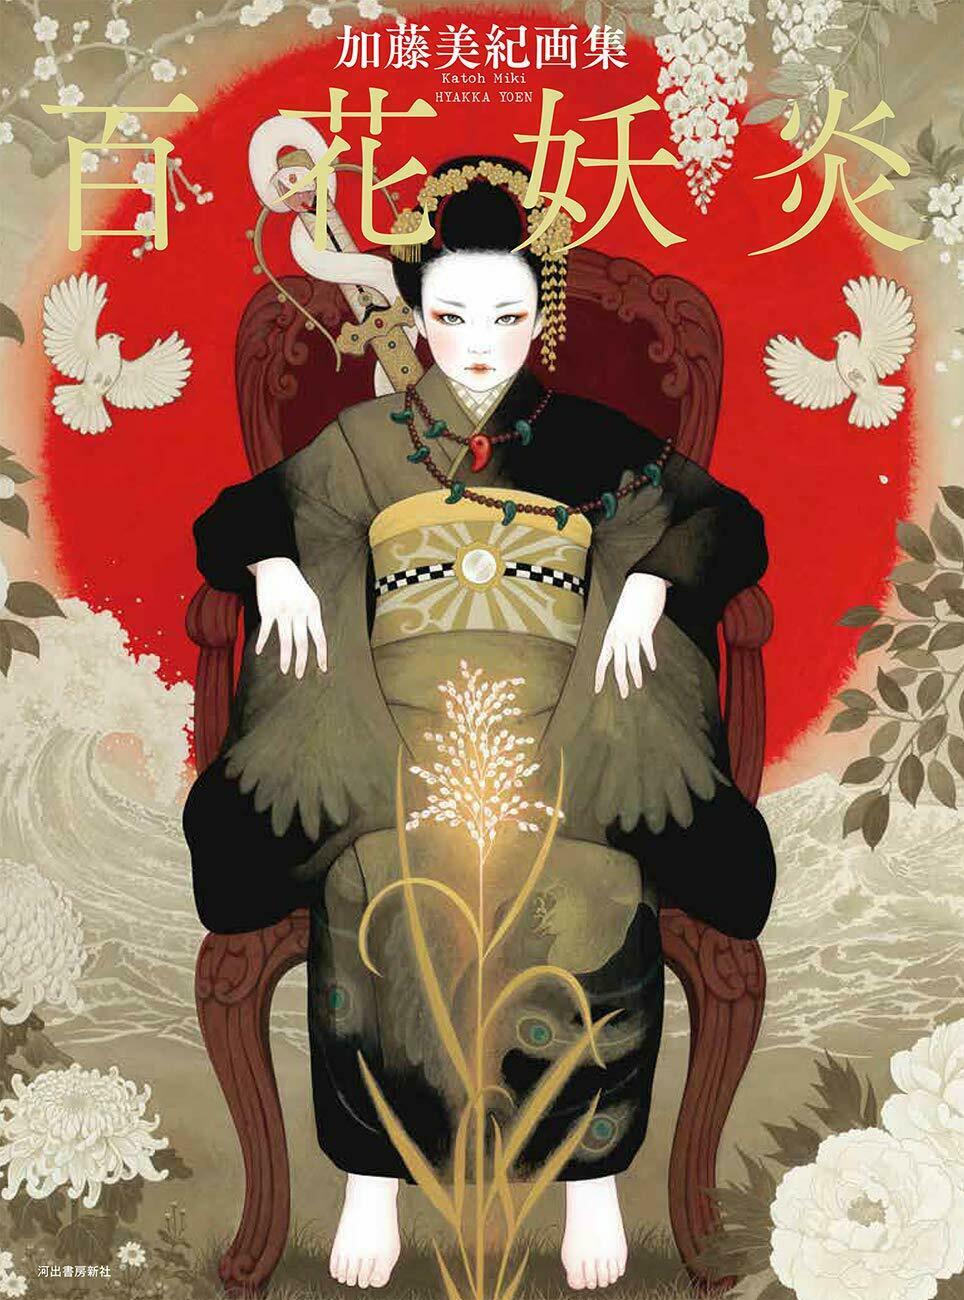 NEW' Miki KATOH Art Book Hyakka Yoen" | JAPAN Bijin-ga Gouache